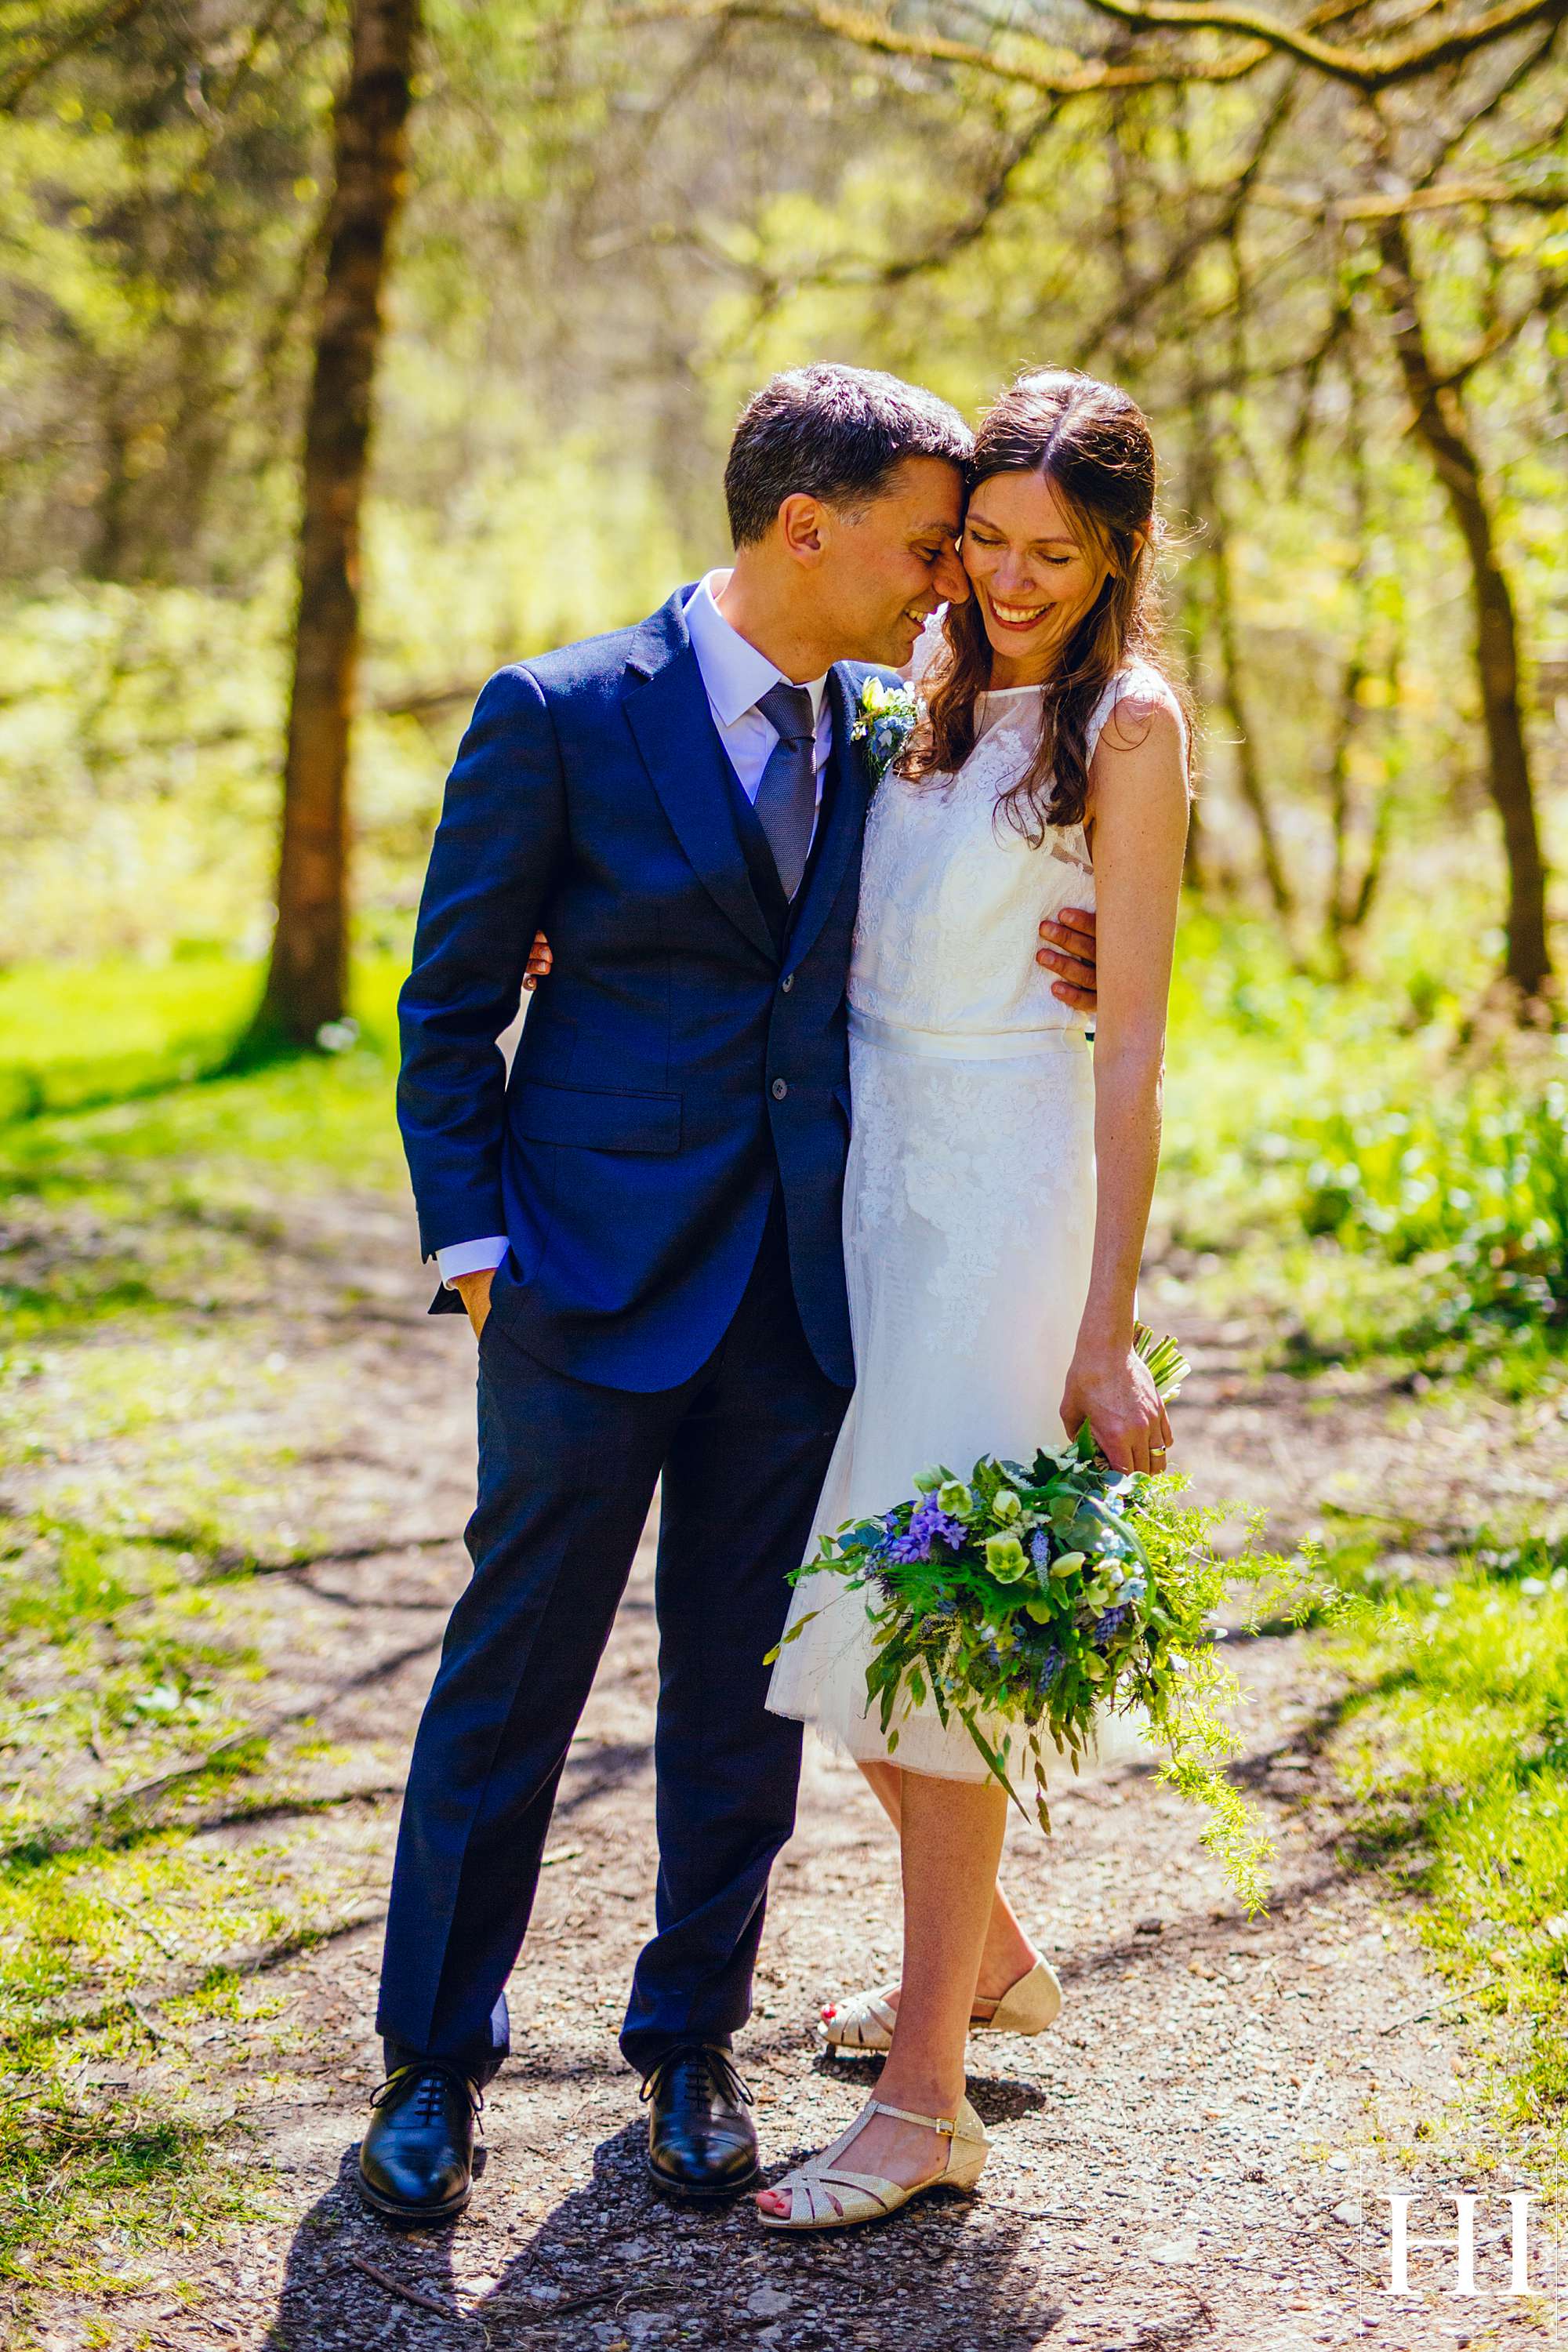 Best wedding photography Leeds 2018 by Hamish Irvine Wedding Photographer best of 2018 highlights yorkshire wedding photography